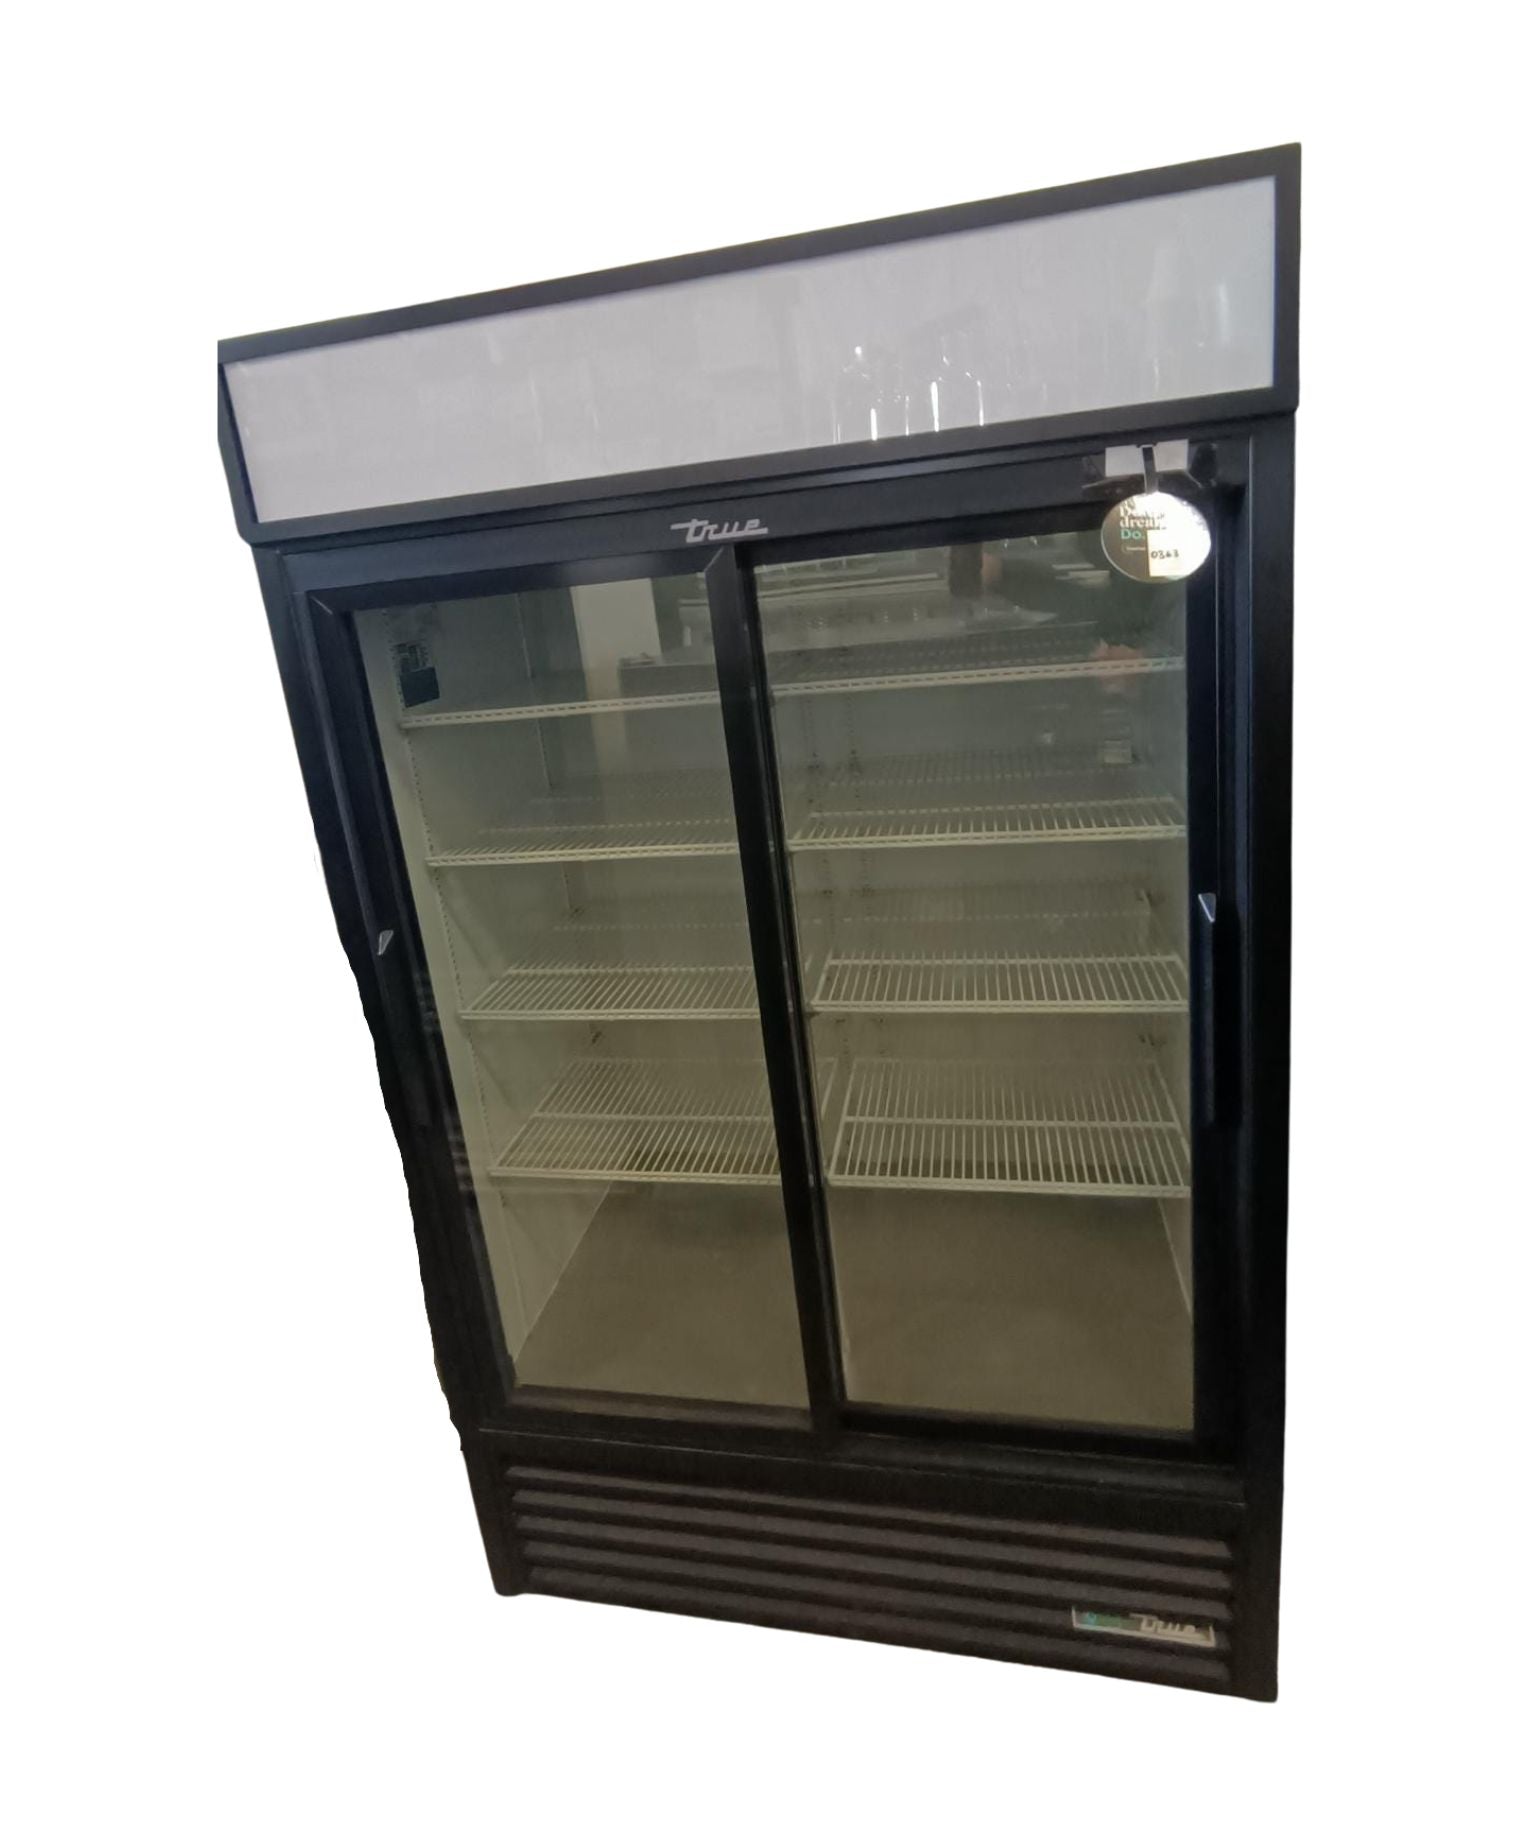 Thumbnail - True GDM-41-HC-LD Refrigerator